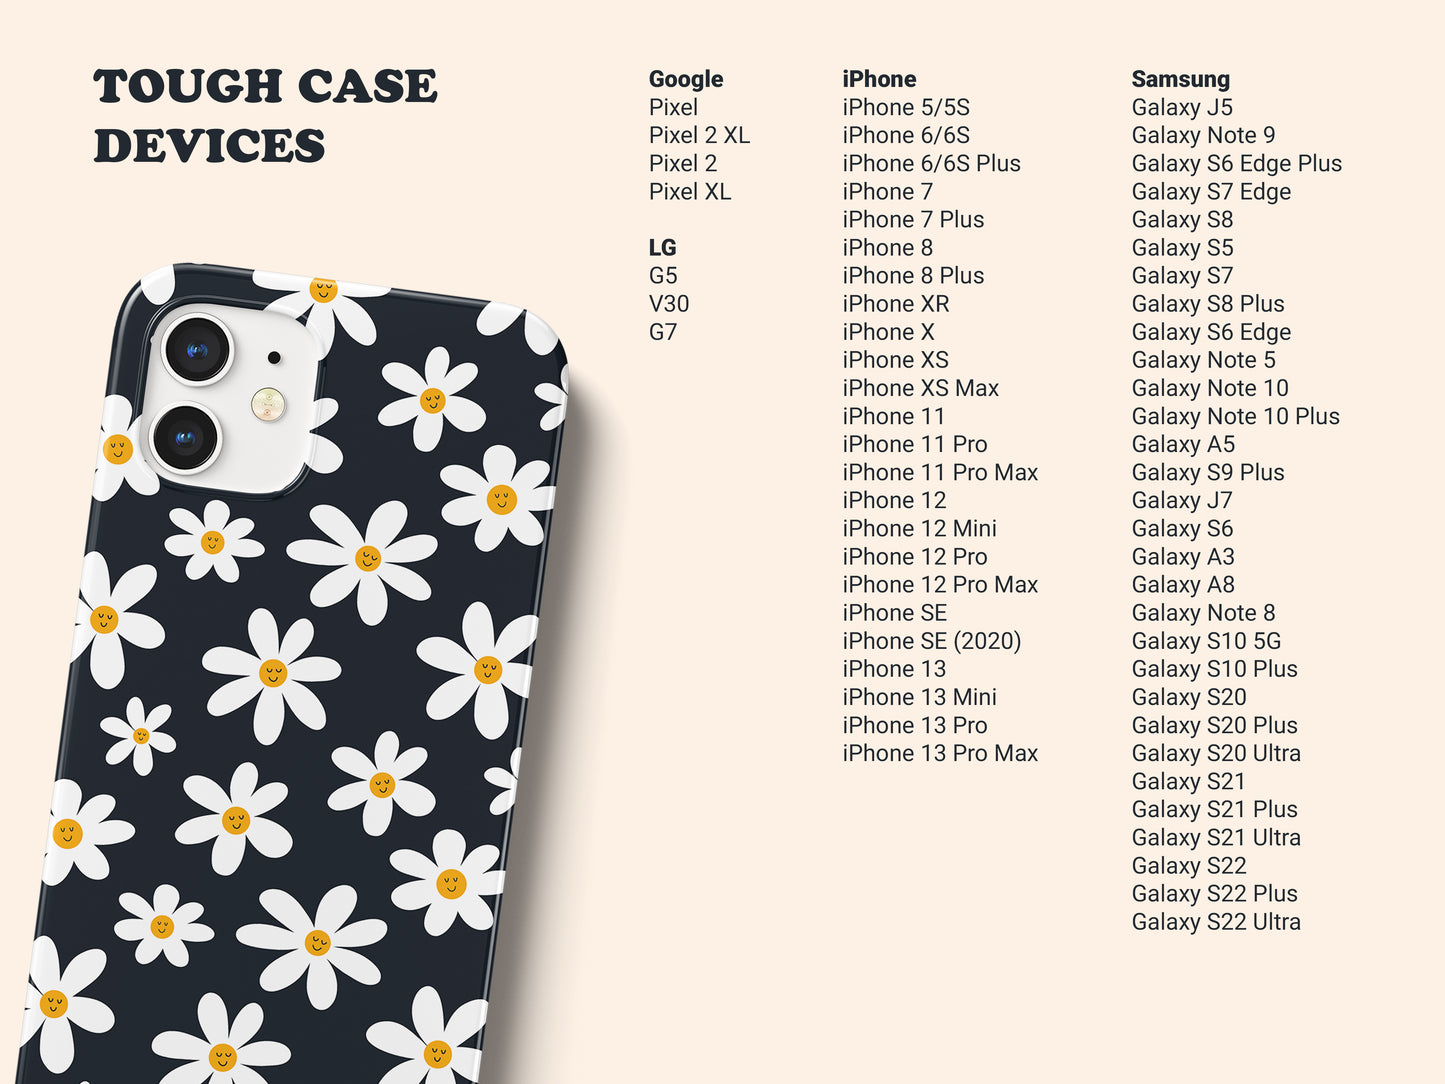 Lilac Daisies Flowers Tough Phone Case